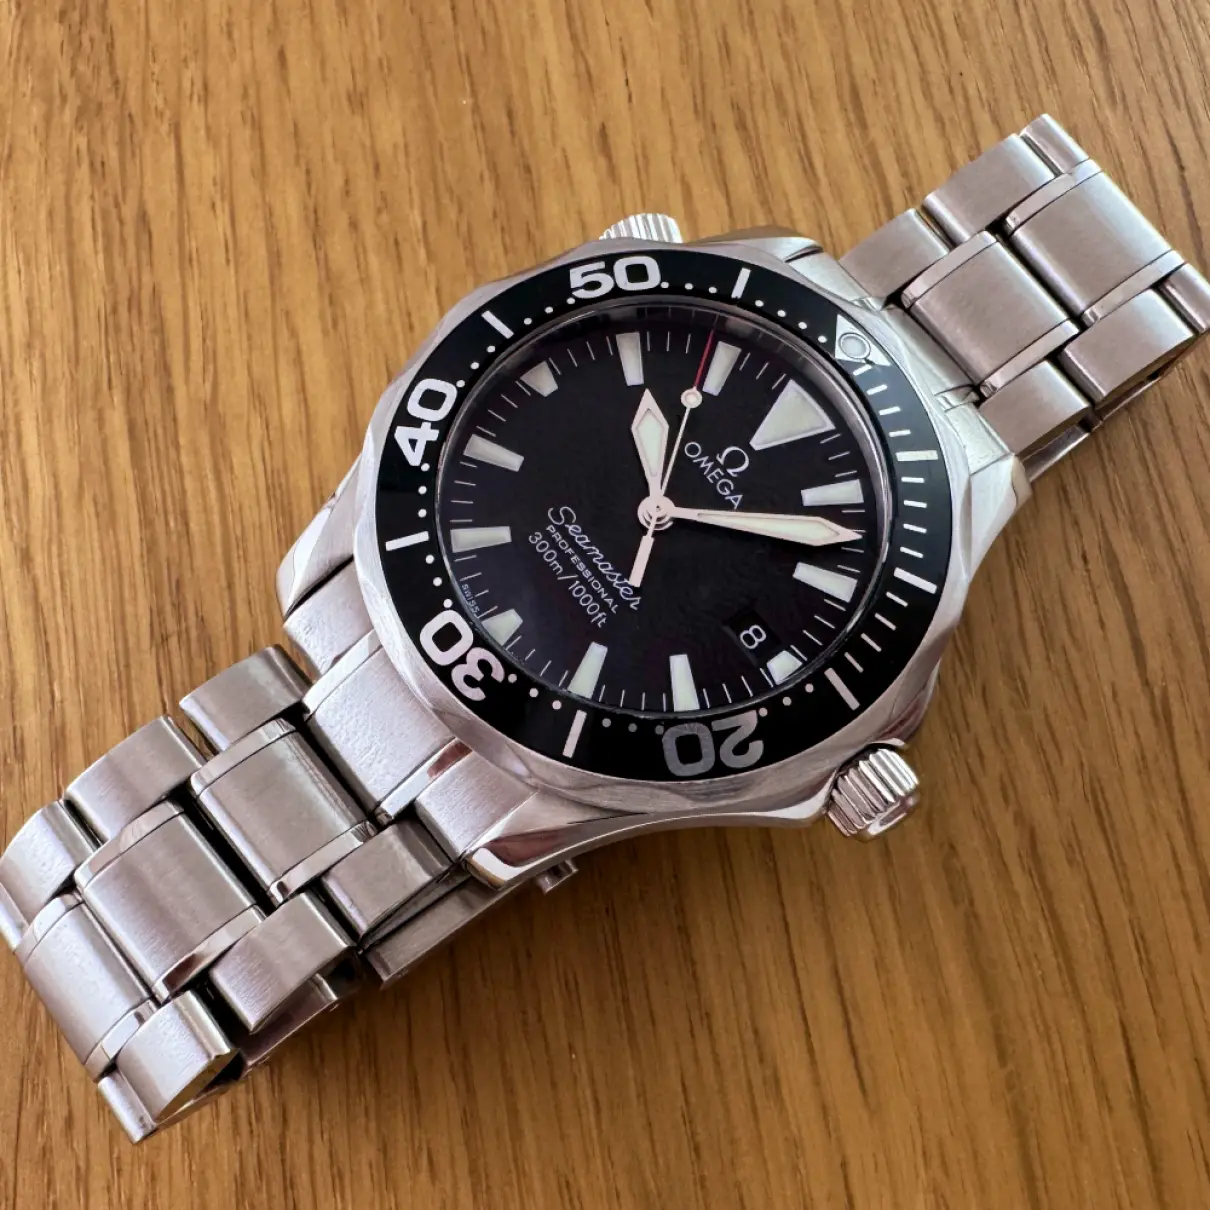 Buy Omega Seamaster 300 watch online